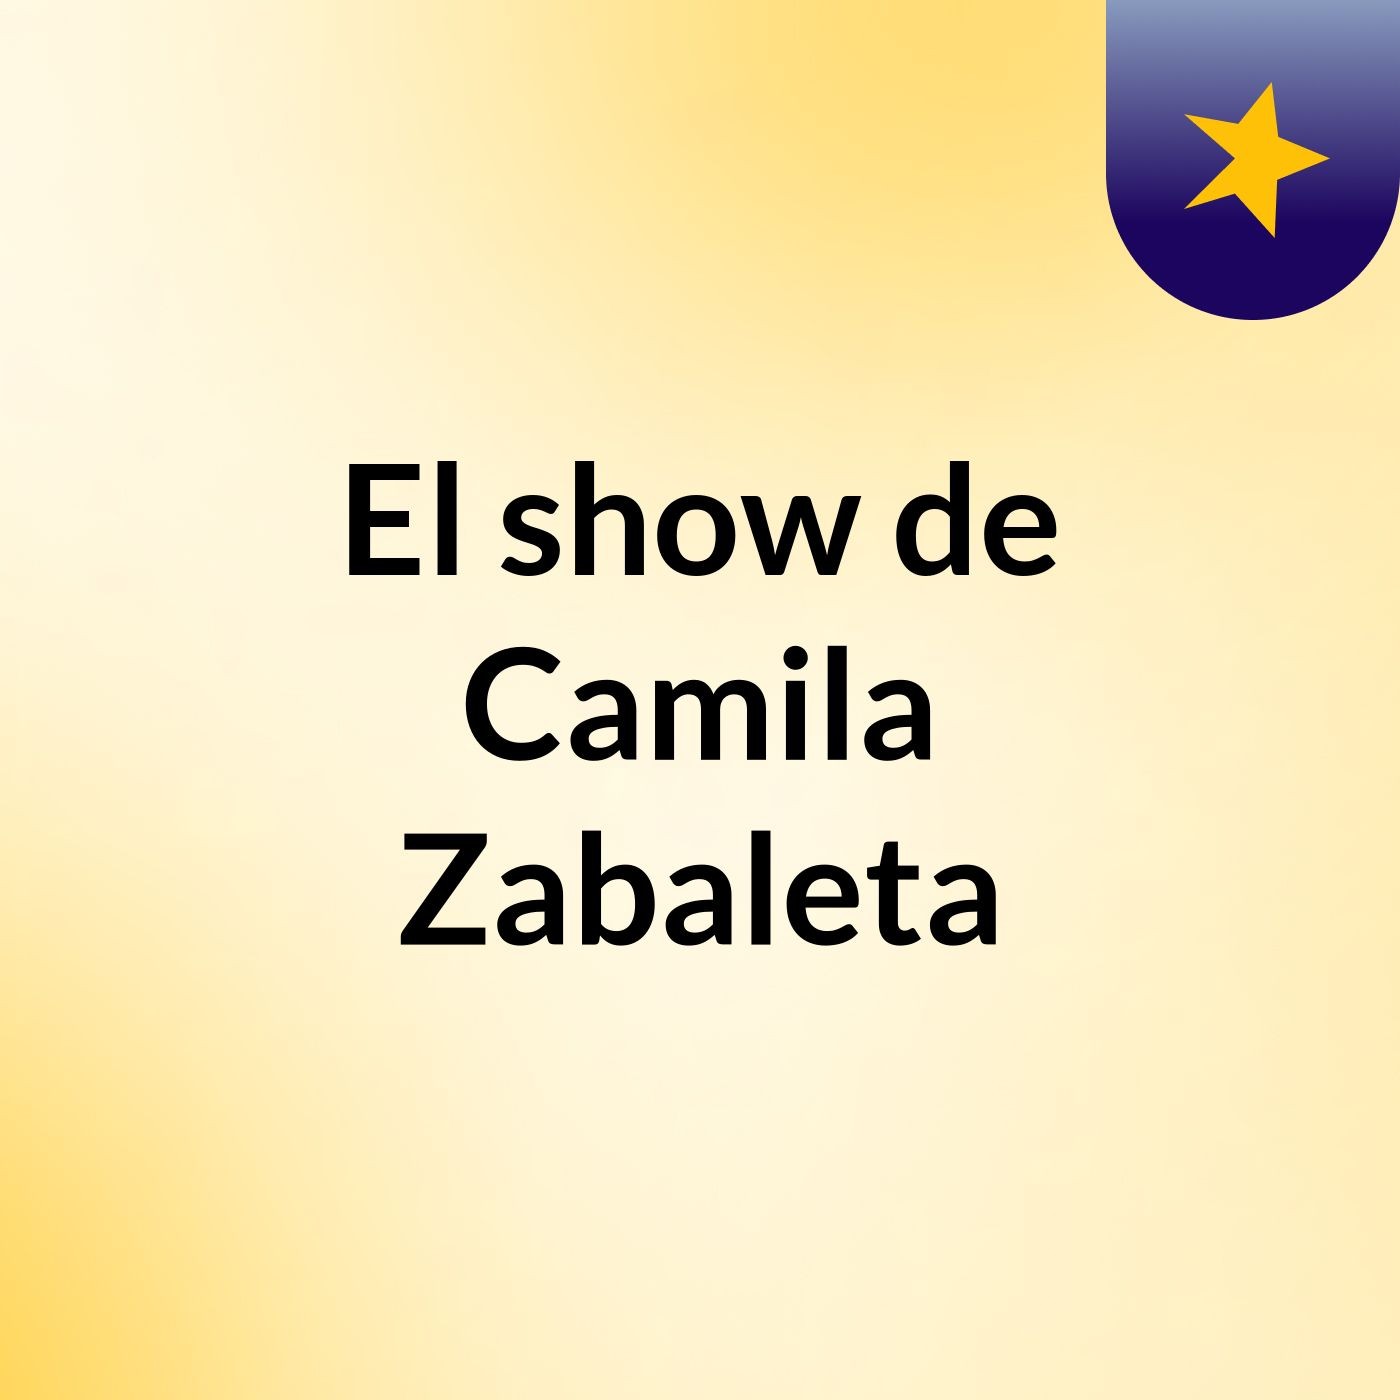 El show de Camila Zabaleta